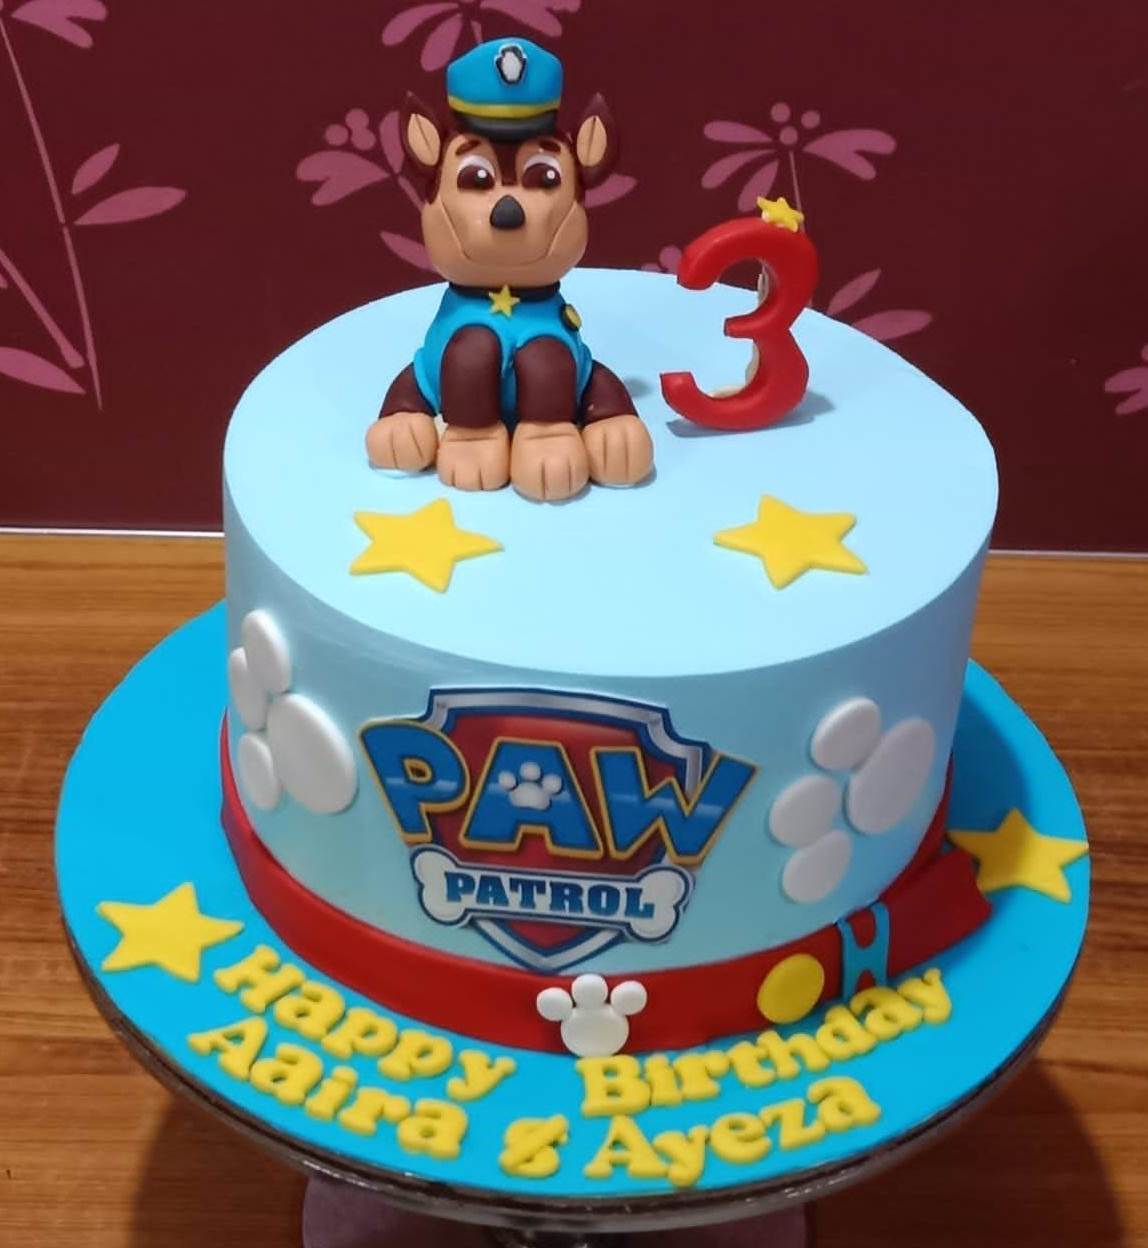 Paw Patrol Cake Design for Boys Birthday in Delhi | YummyCake